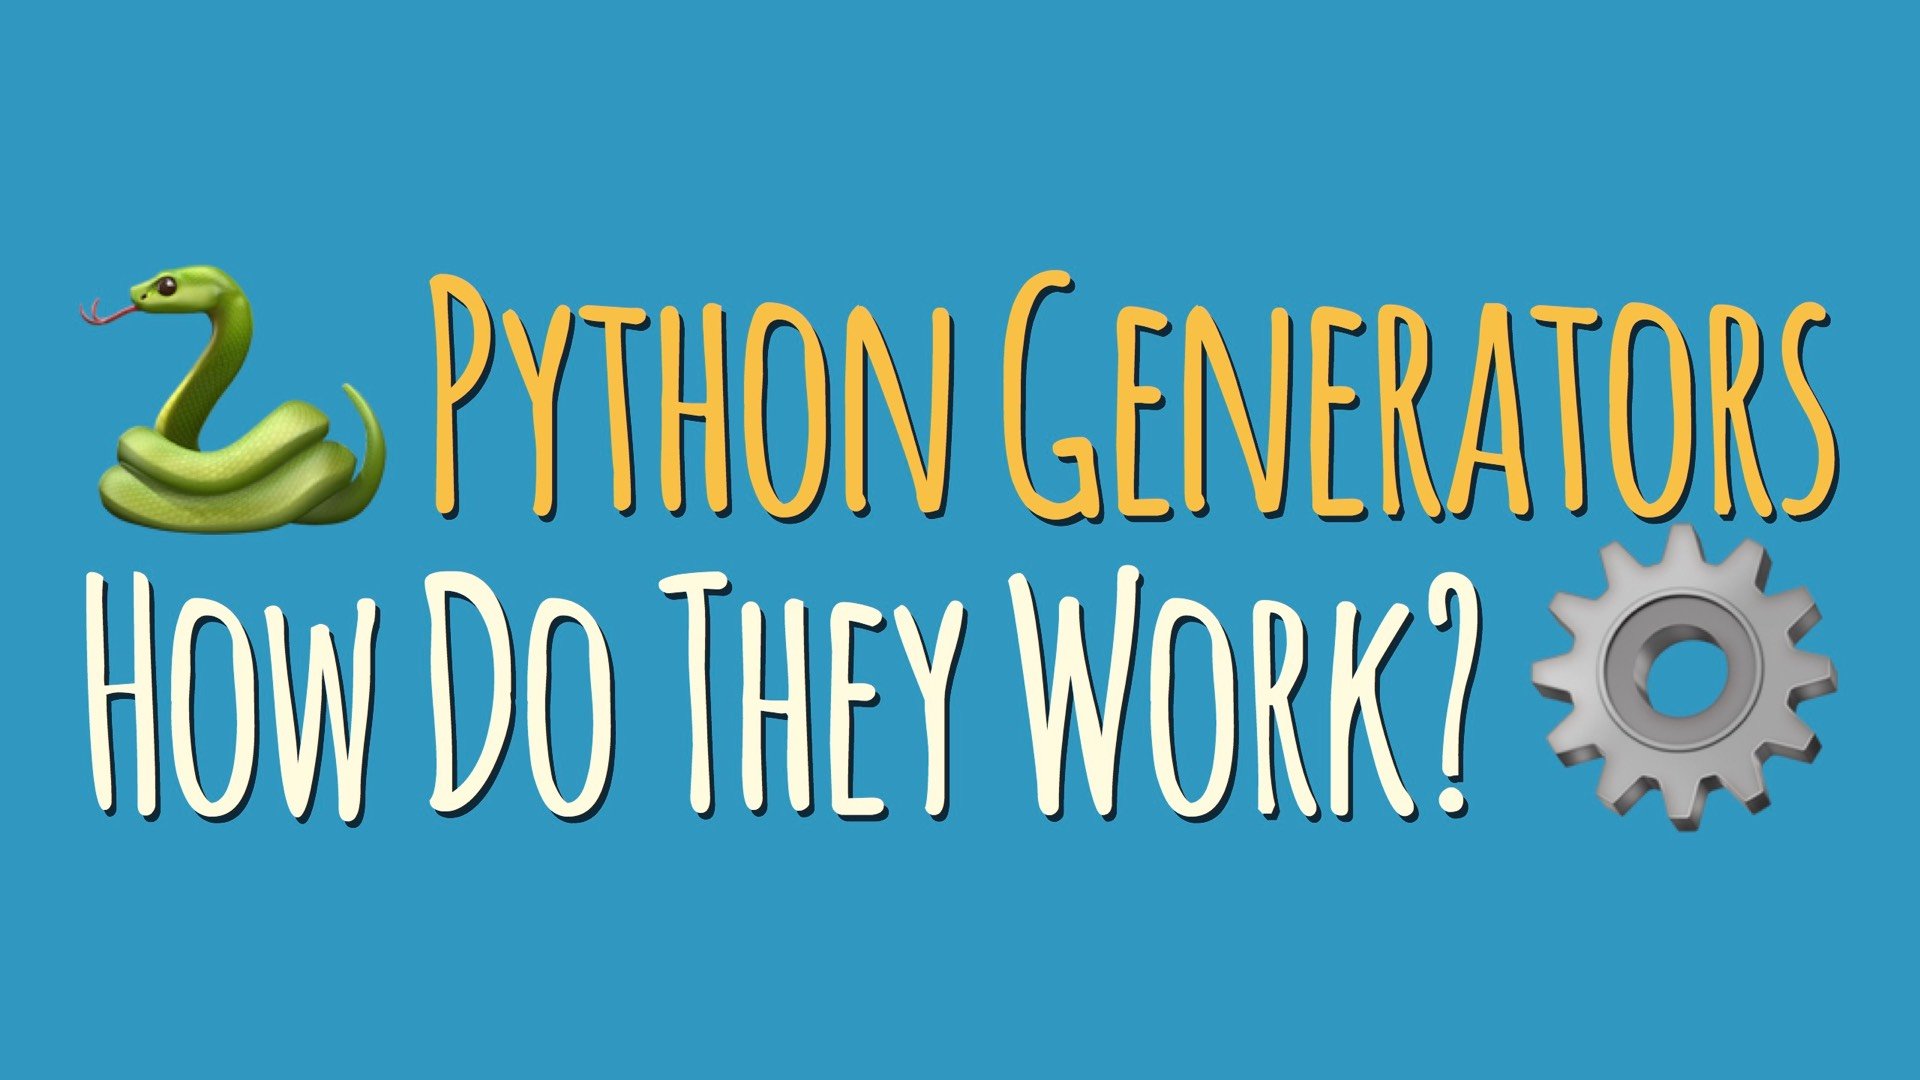 What Are Python Generators?